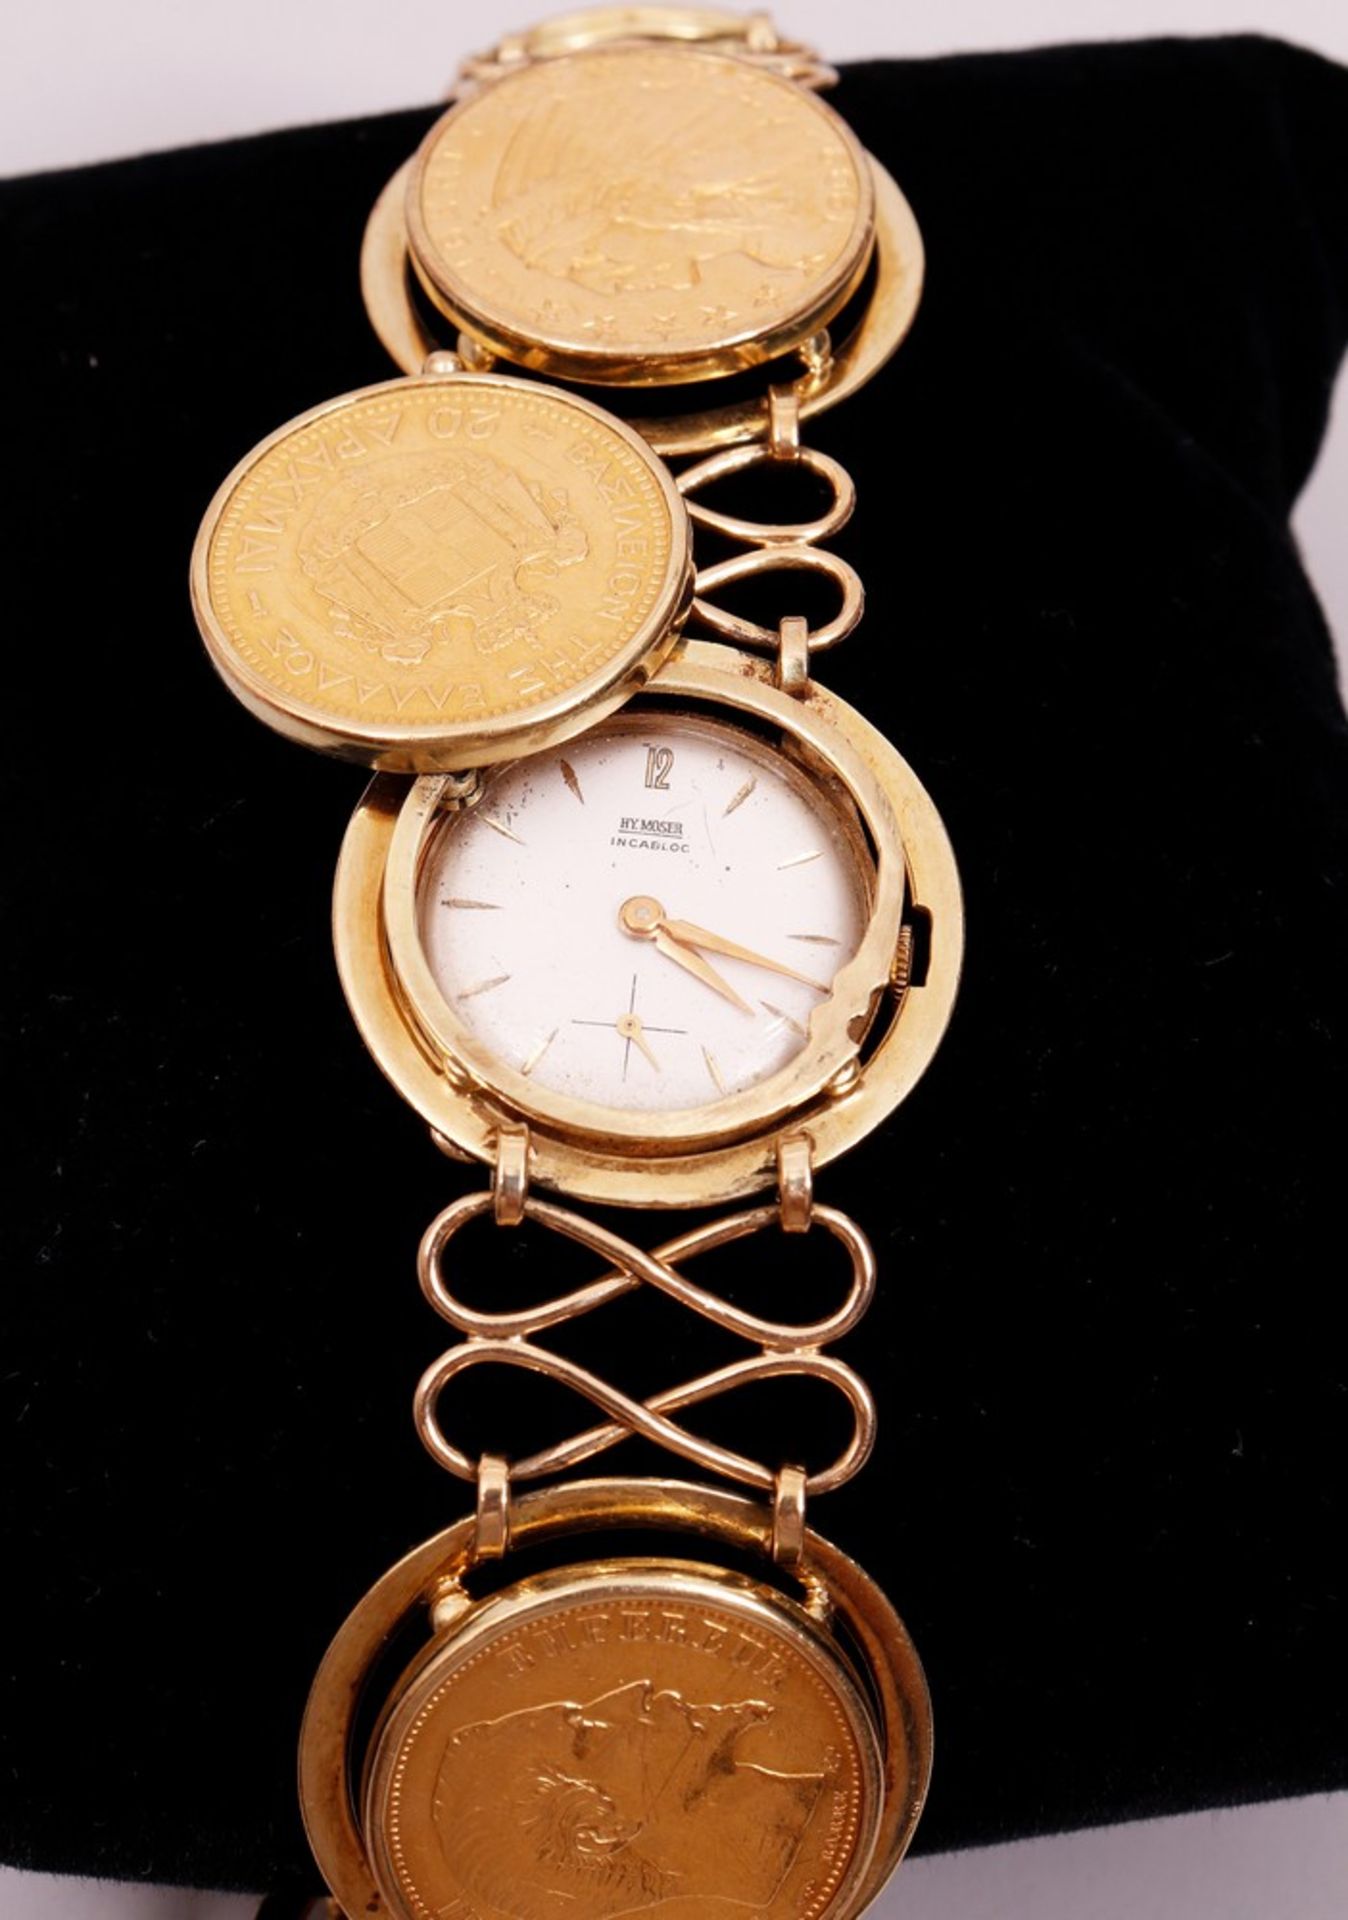 Wristwatch, 585/900 gold, HY Moser (Henry Moser), Switzerland, 1960s, "Incabloc" model